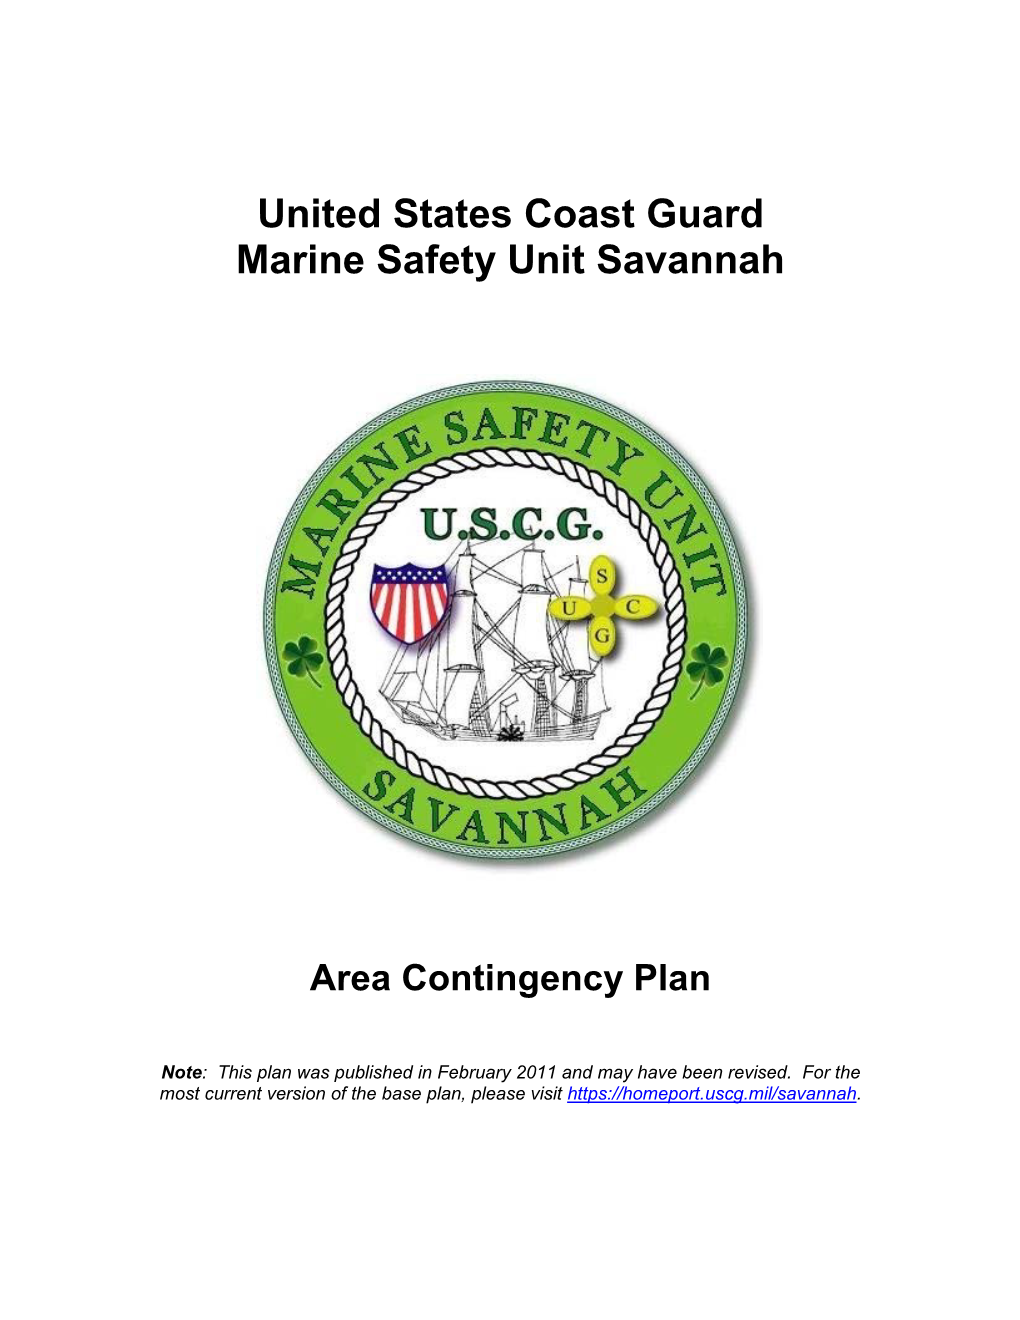 United States Coast Guard Marine Safety Unit Savannah